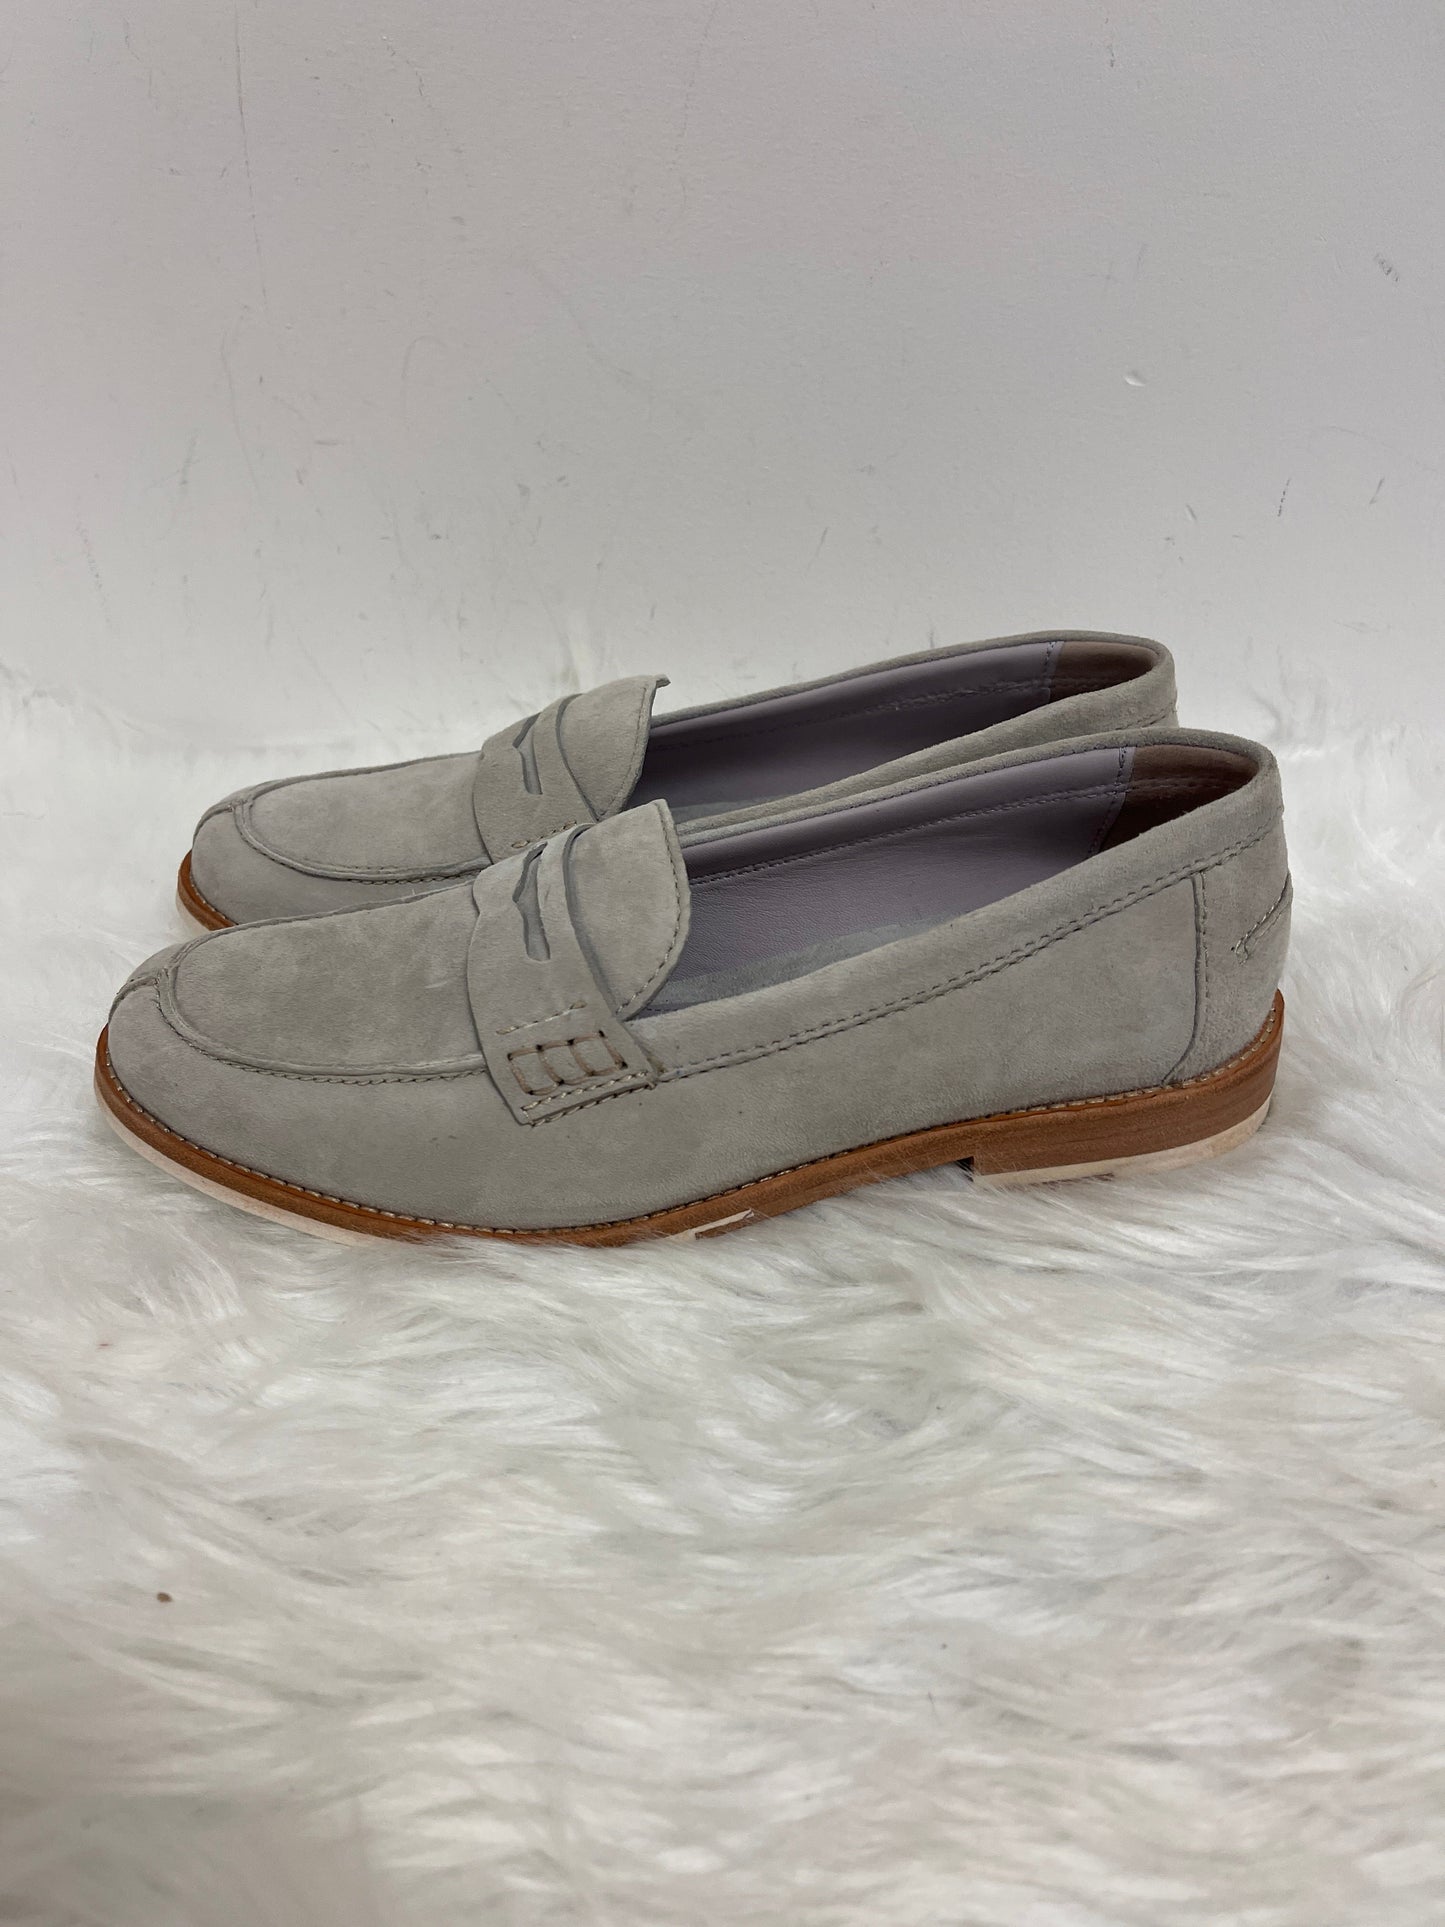 Cream Shoes Flats Johnston & Murphy, Size 8.5